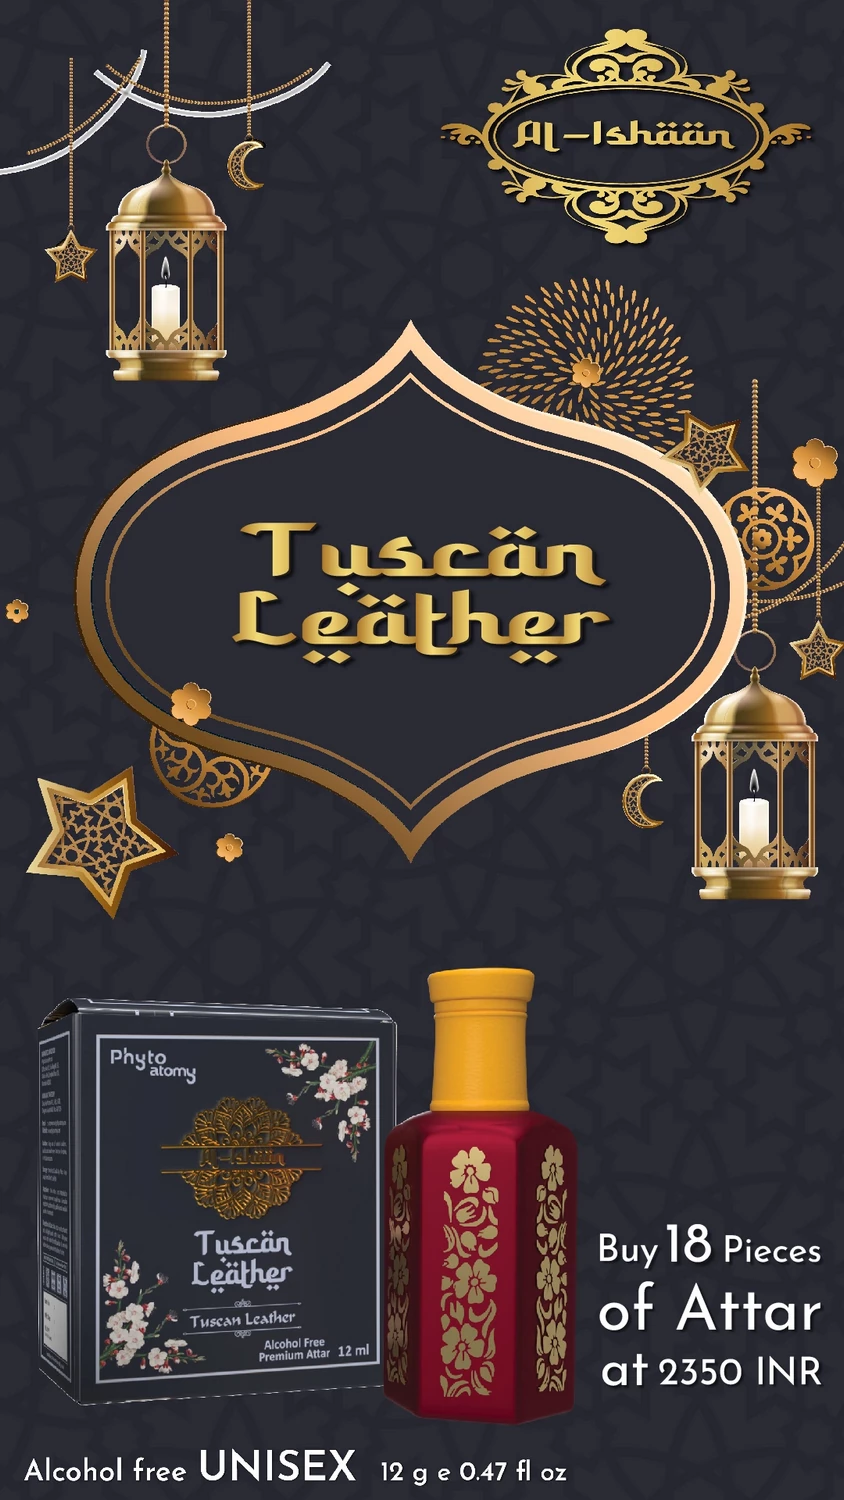 SCBV B2B Al Ishan Tuscan Leather Attar (12ml)-18 Pcs.